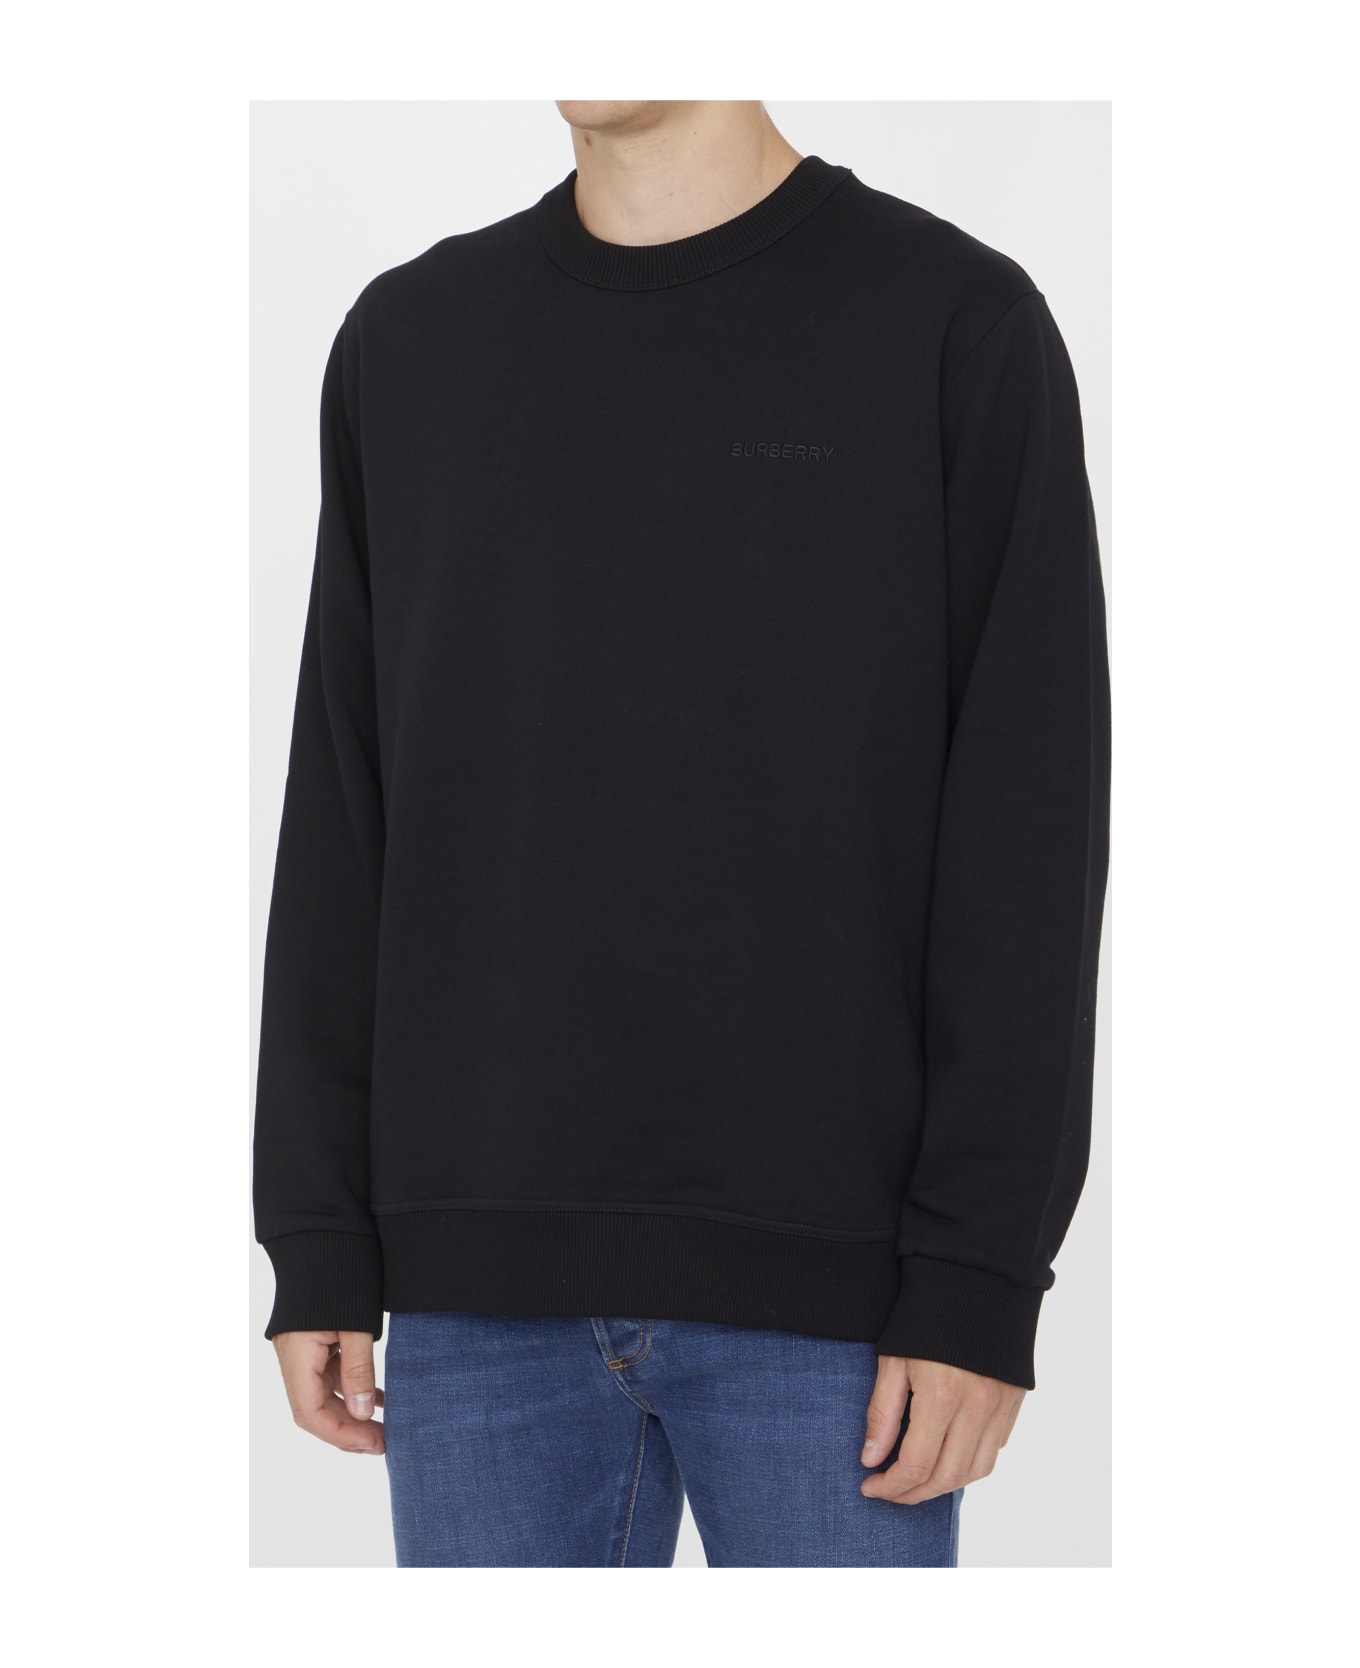 Burberry Ekd Check Sweatshirt - Black